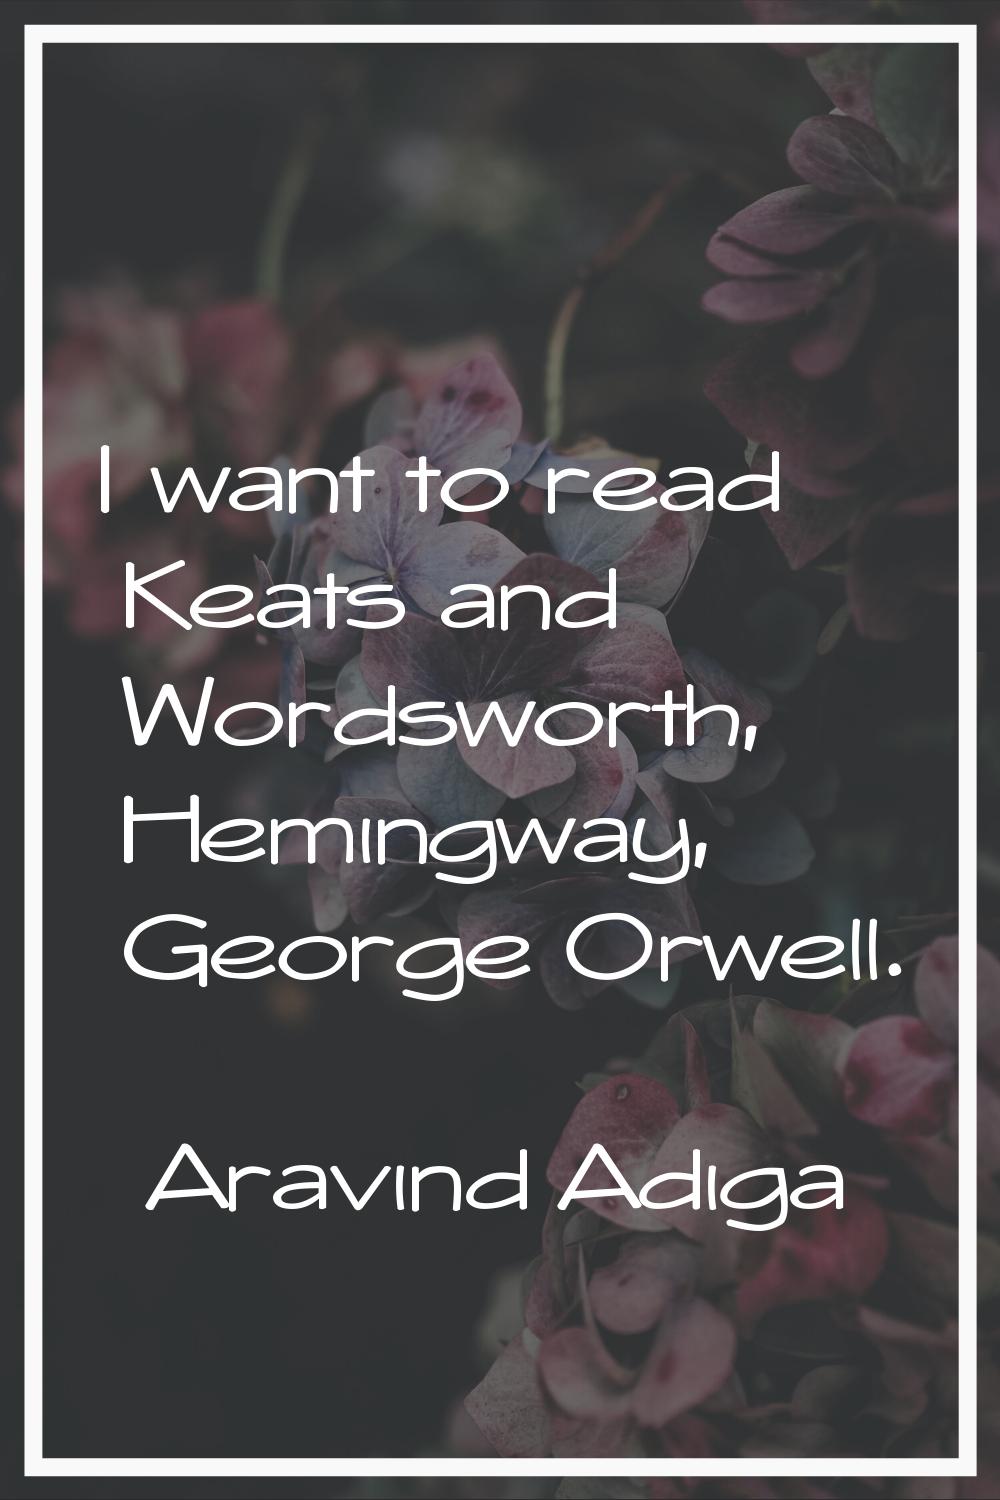 I want to read Keats and Wordsworth, Hemingway, George Orwell.